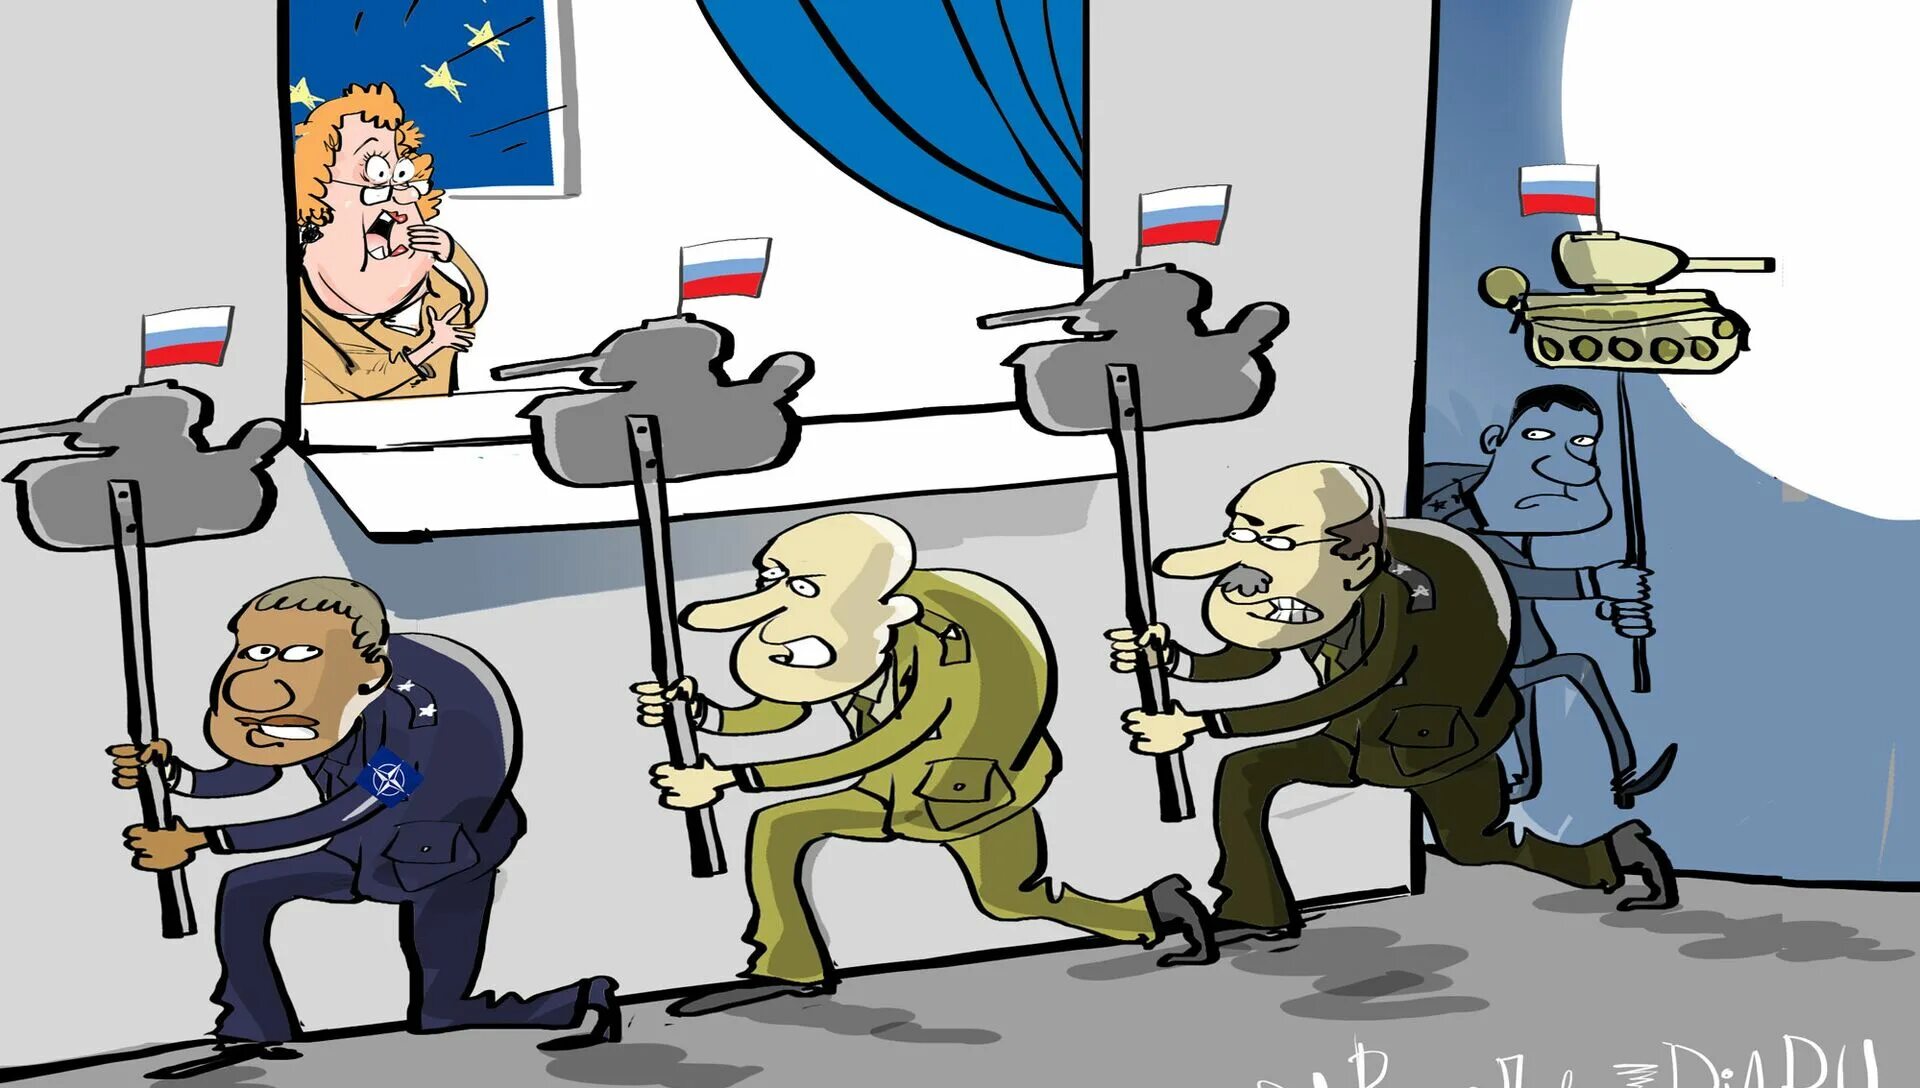 Нато пугало. Политические карикатуры. Карикатуры на Запад. Карикатура на США И Украину. Западные карикатуры.